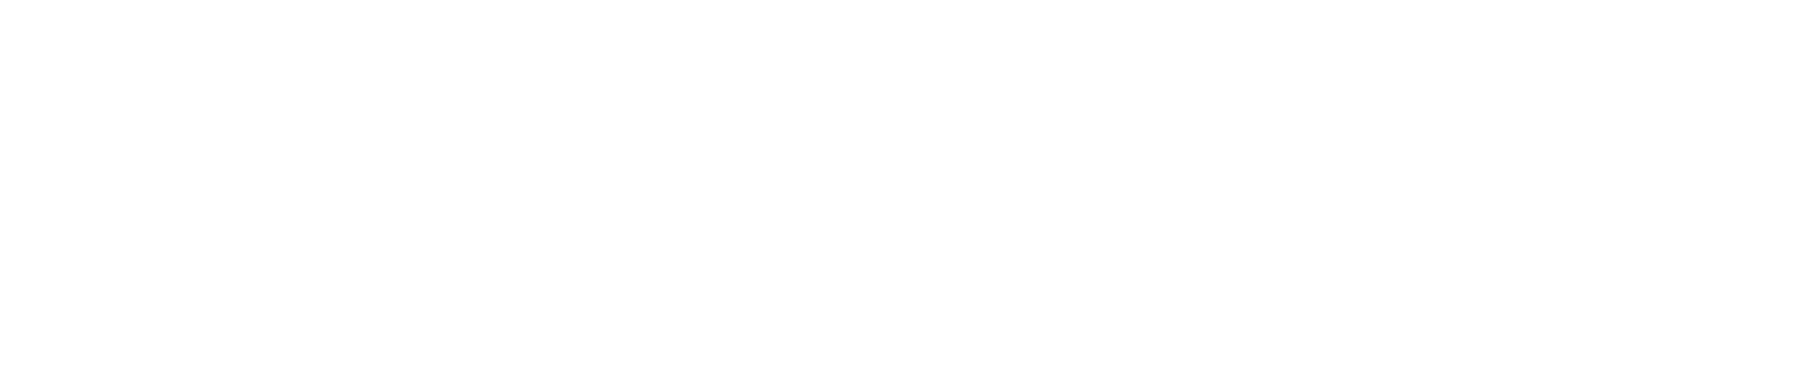 Stebby_logo_horizontal_white